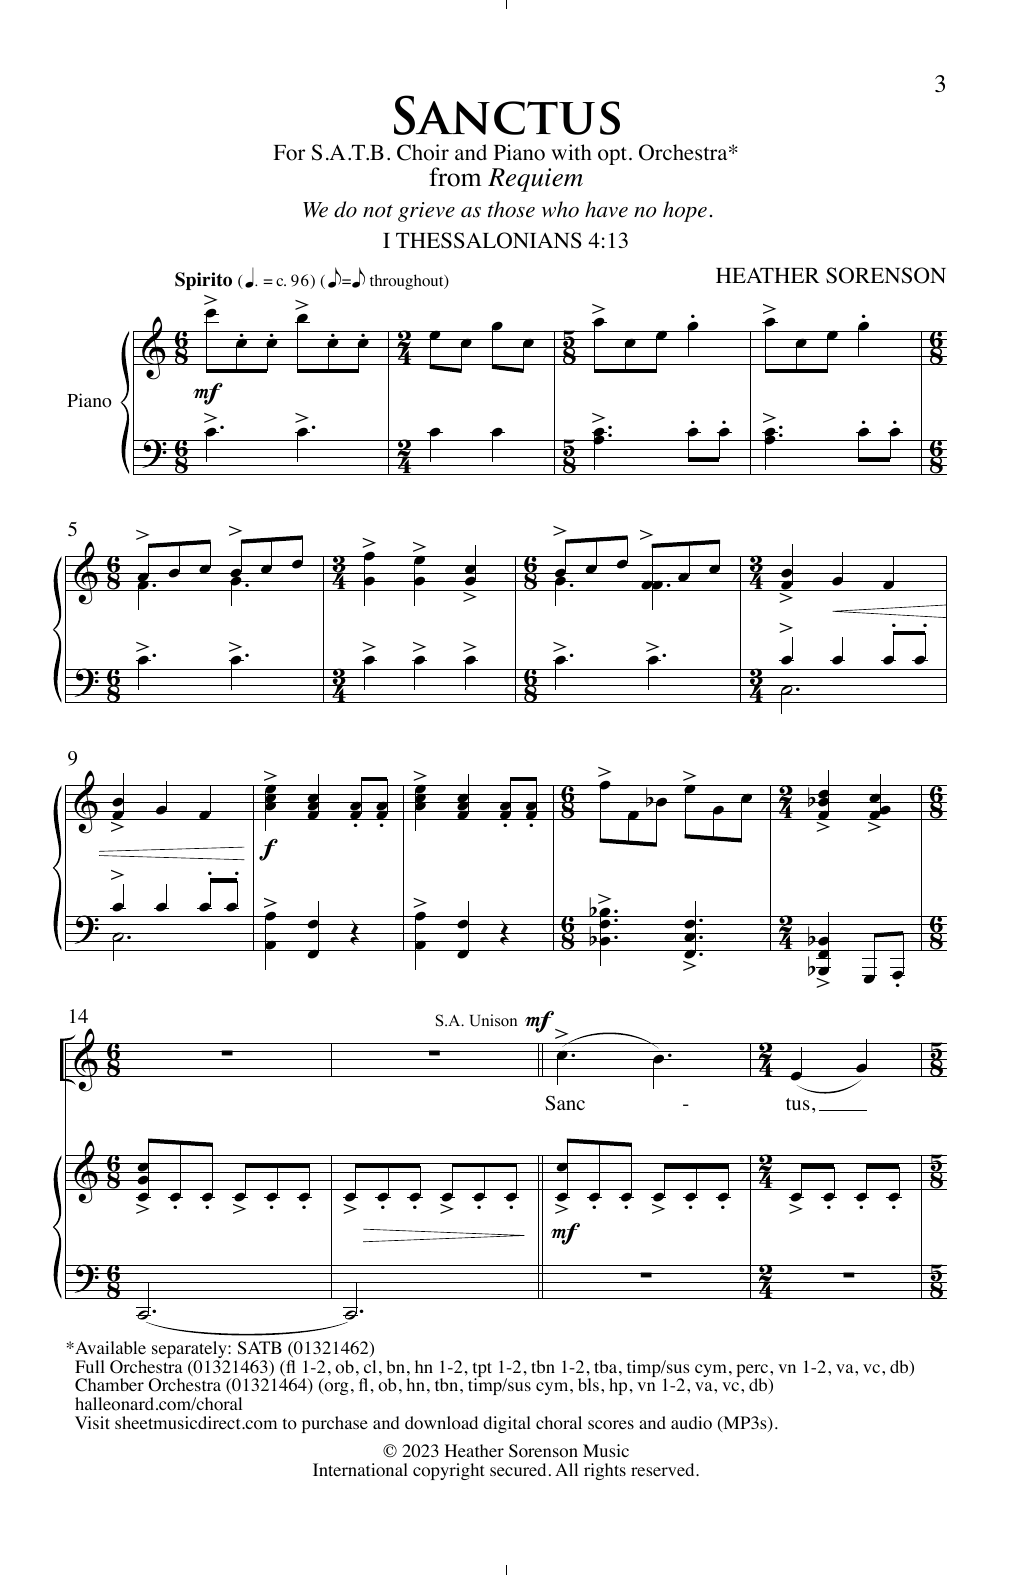 Heather Sorenson Sanctus Sheet Music Notes & Chords for SATB Choir - Download or Print PDF